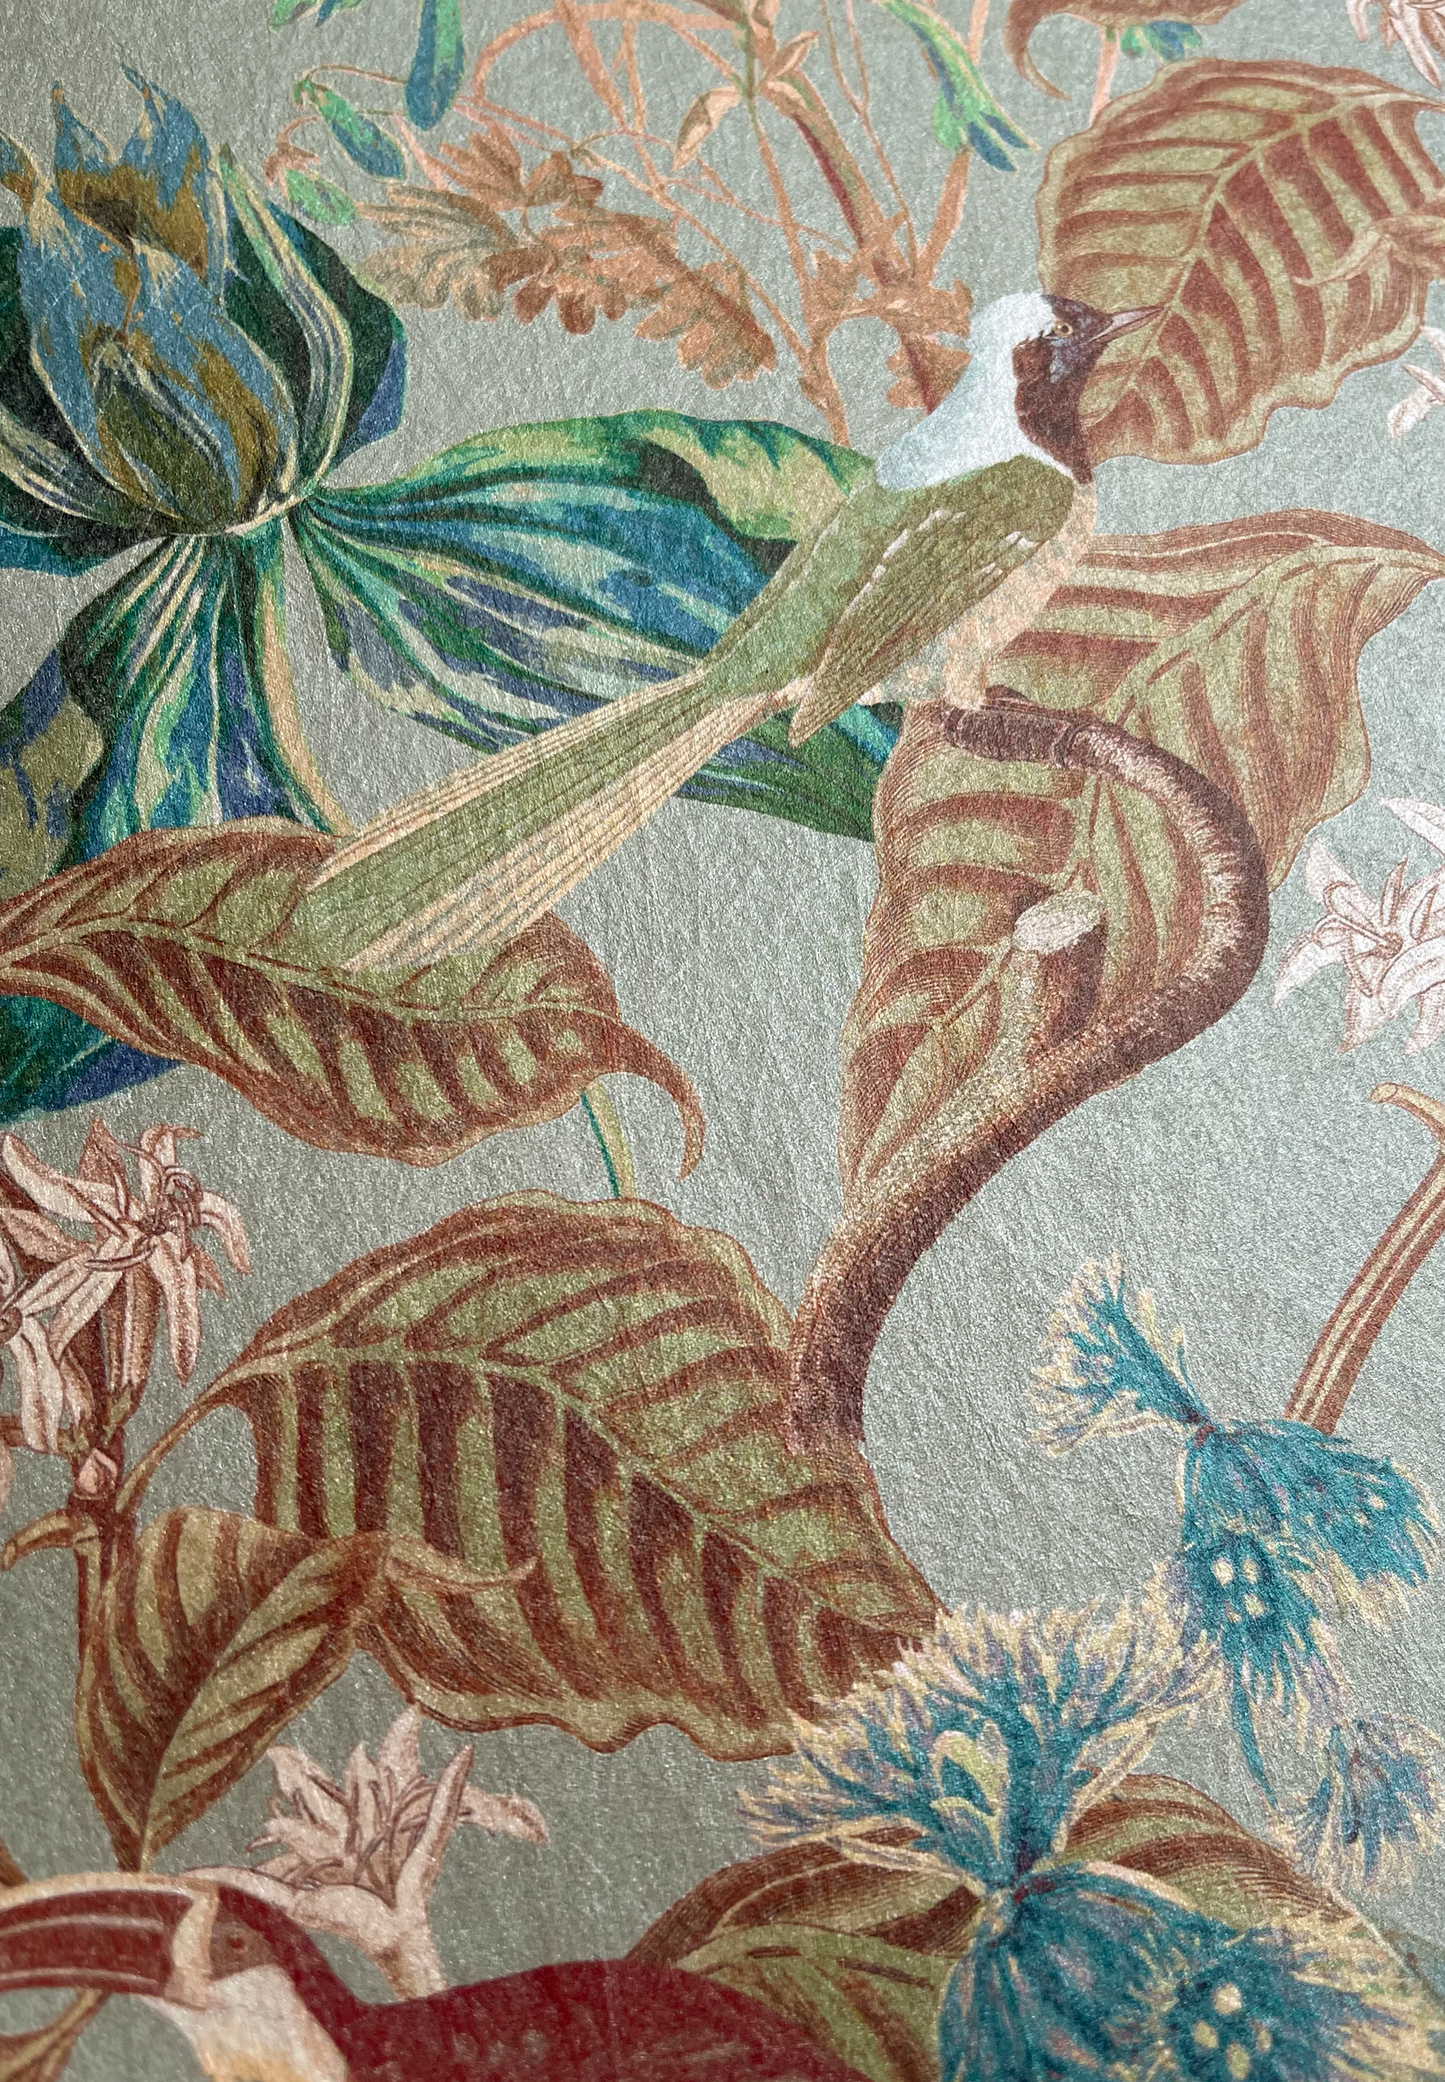 Textured botanical Aviary Isle Wallpaper in Skylight blue from Deus ex Gardenia.